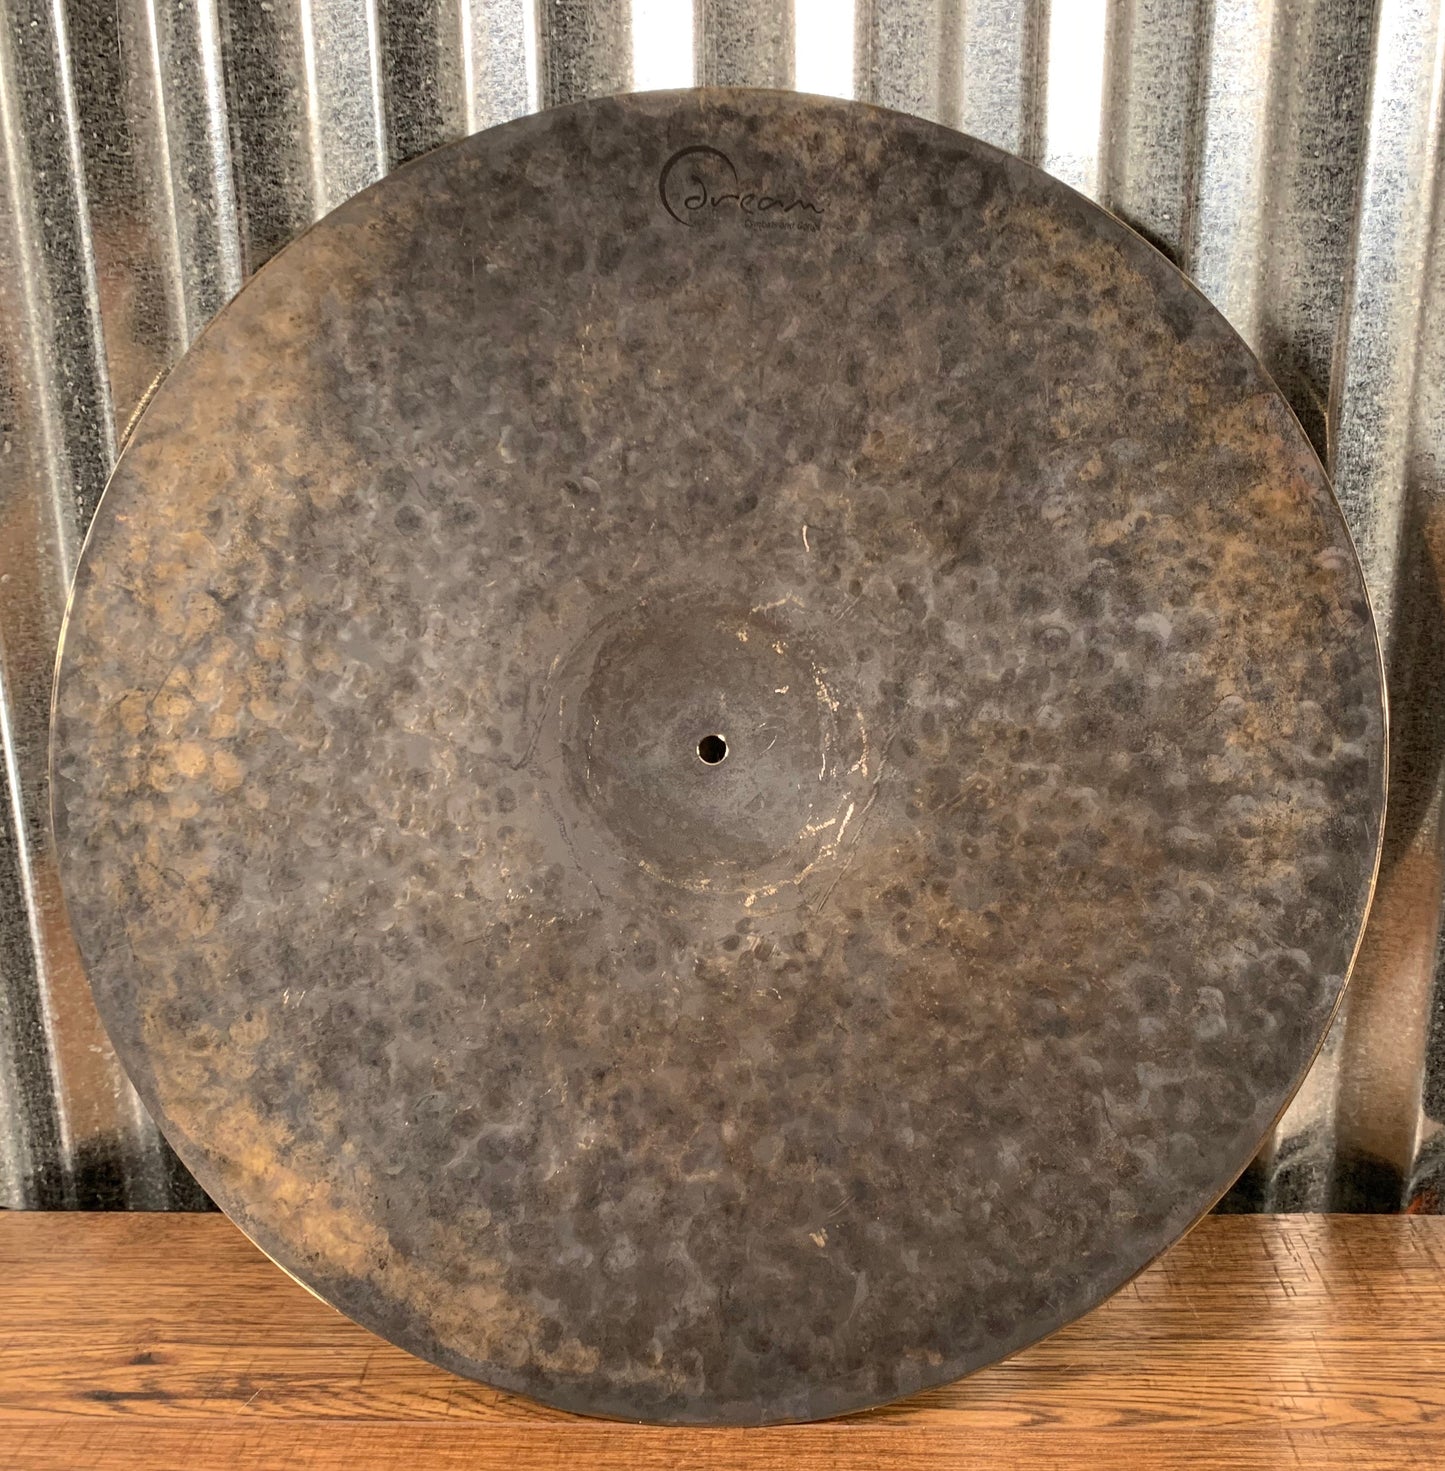 Dream Cymbals DMMRI22 Dark Matter Series Hand Forged & Hammered 22" Moon Ride